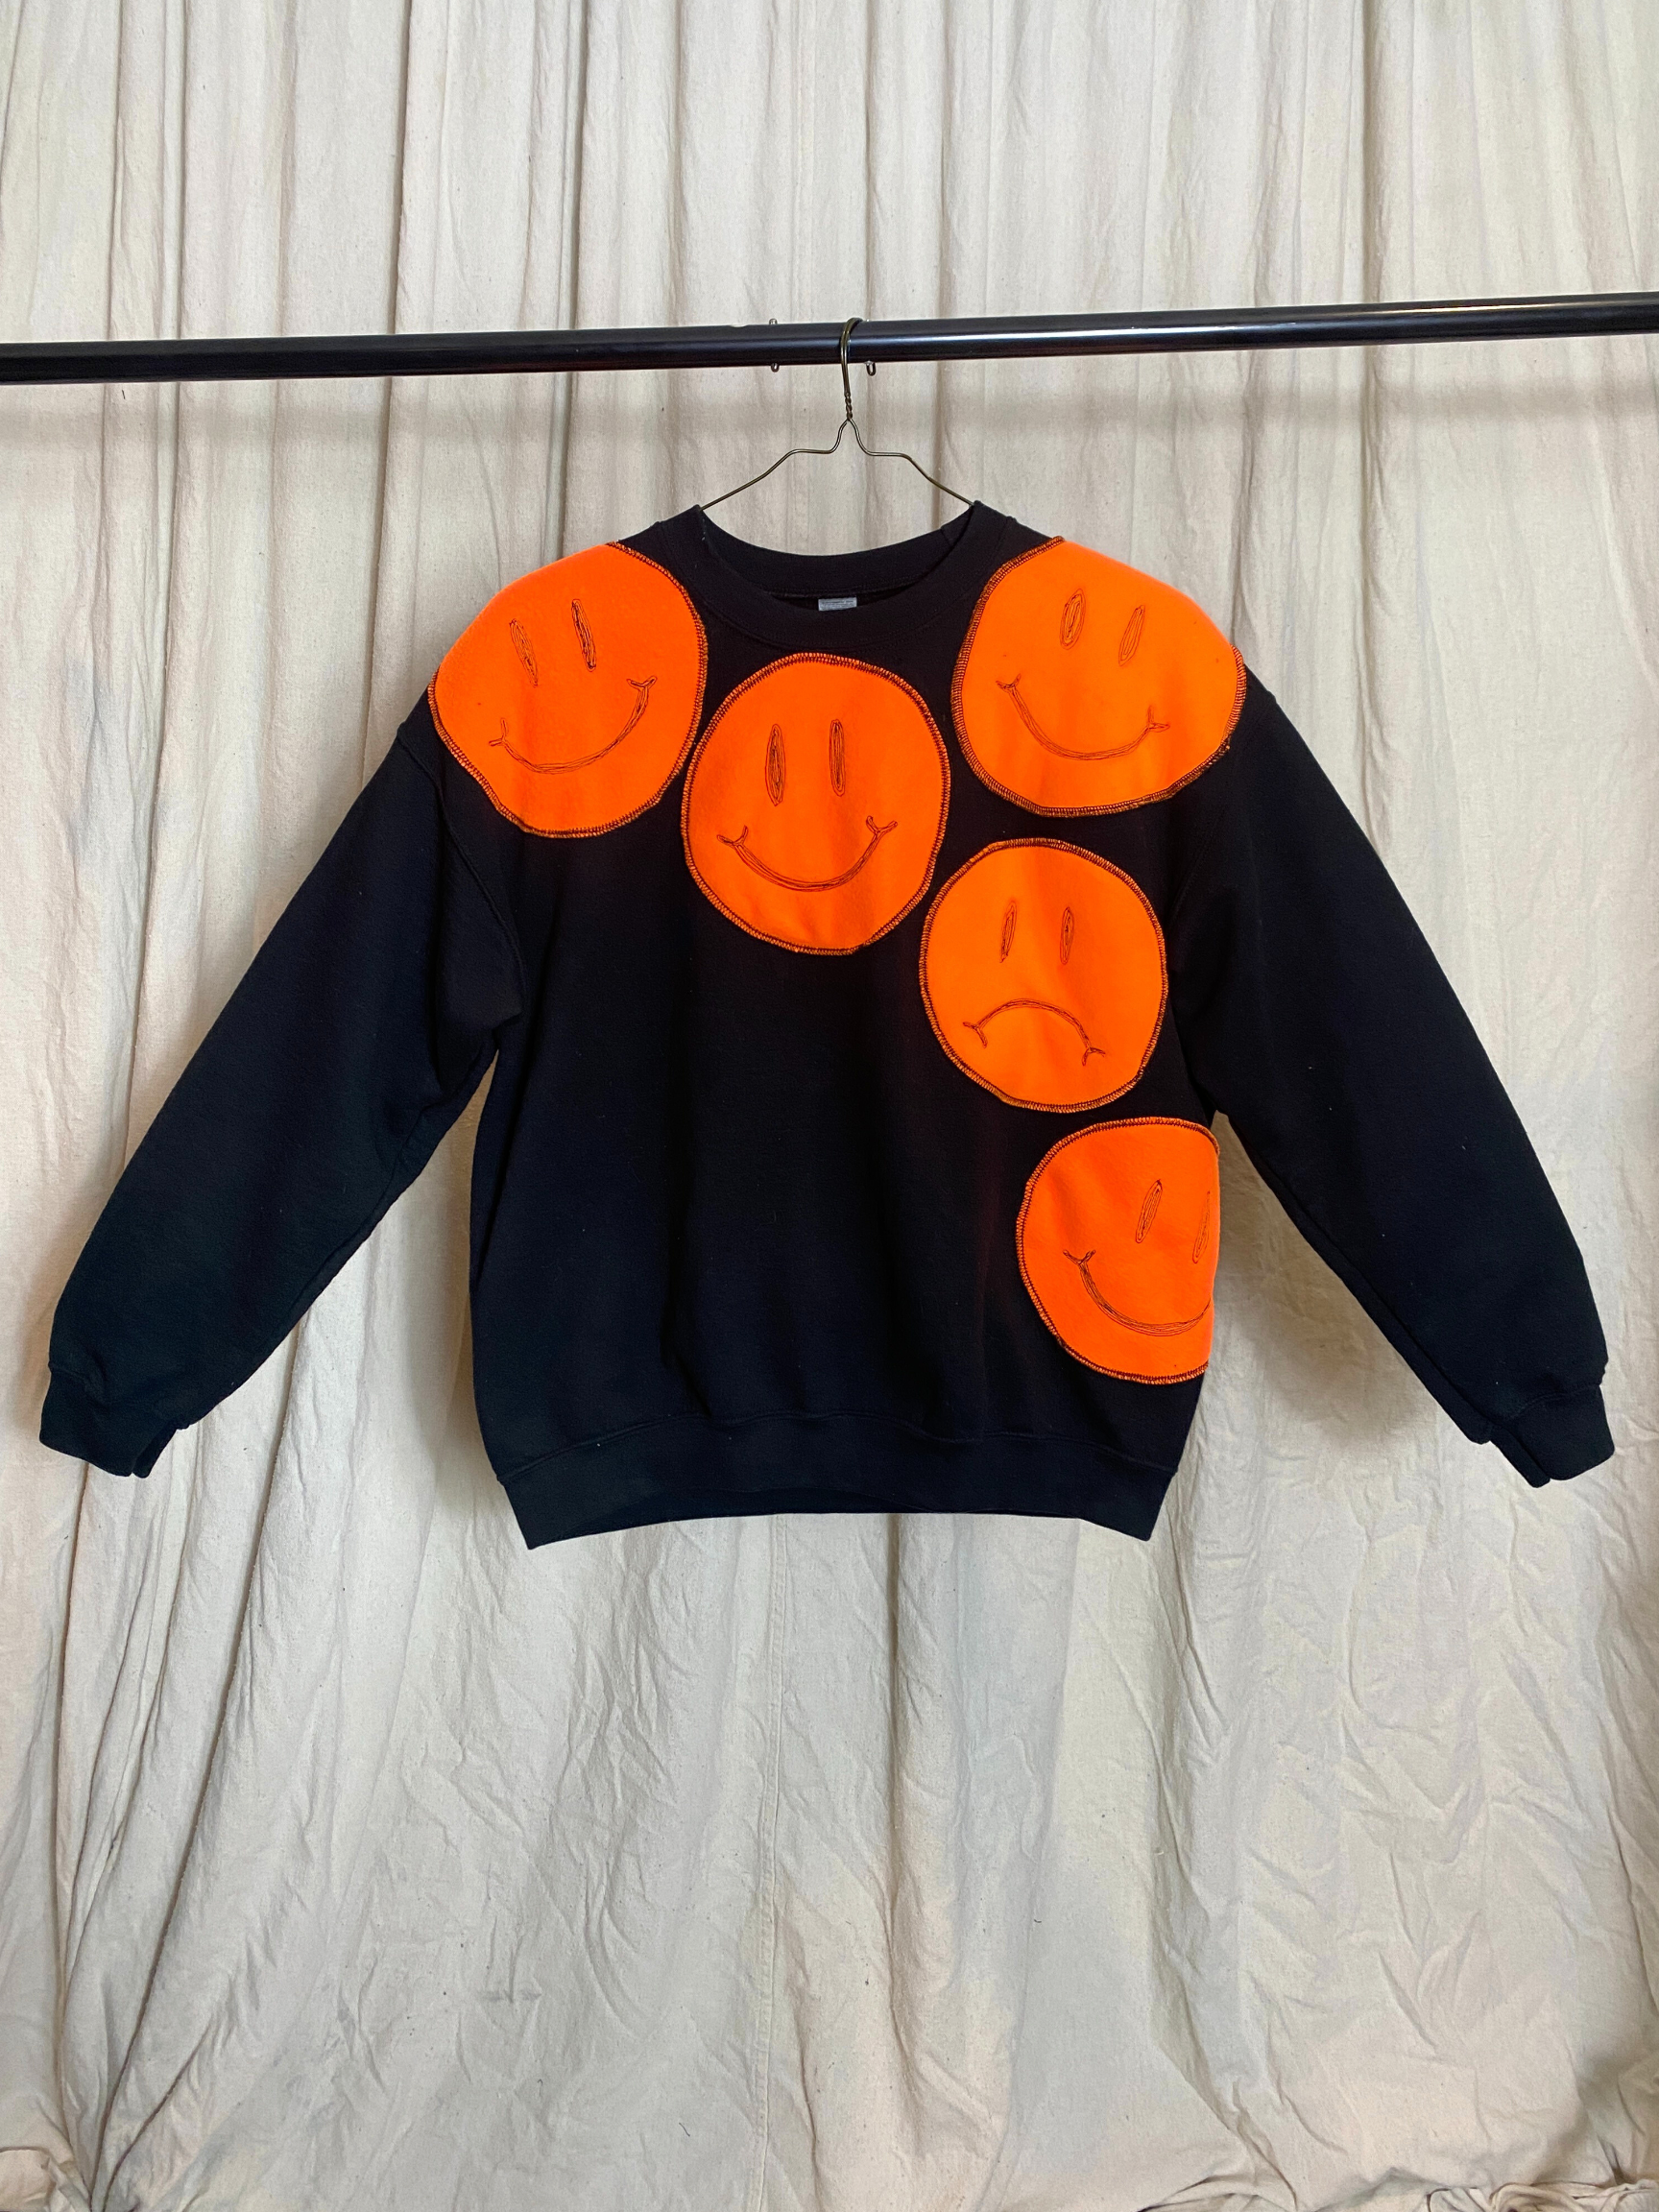 Moody Genderless Sweatshirt- Black Crewneck with Orange Fleece Patches of Smiley Faces